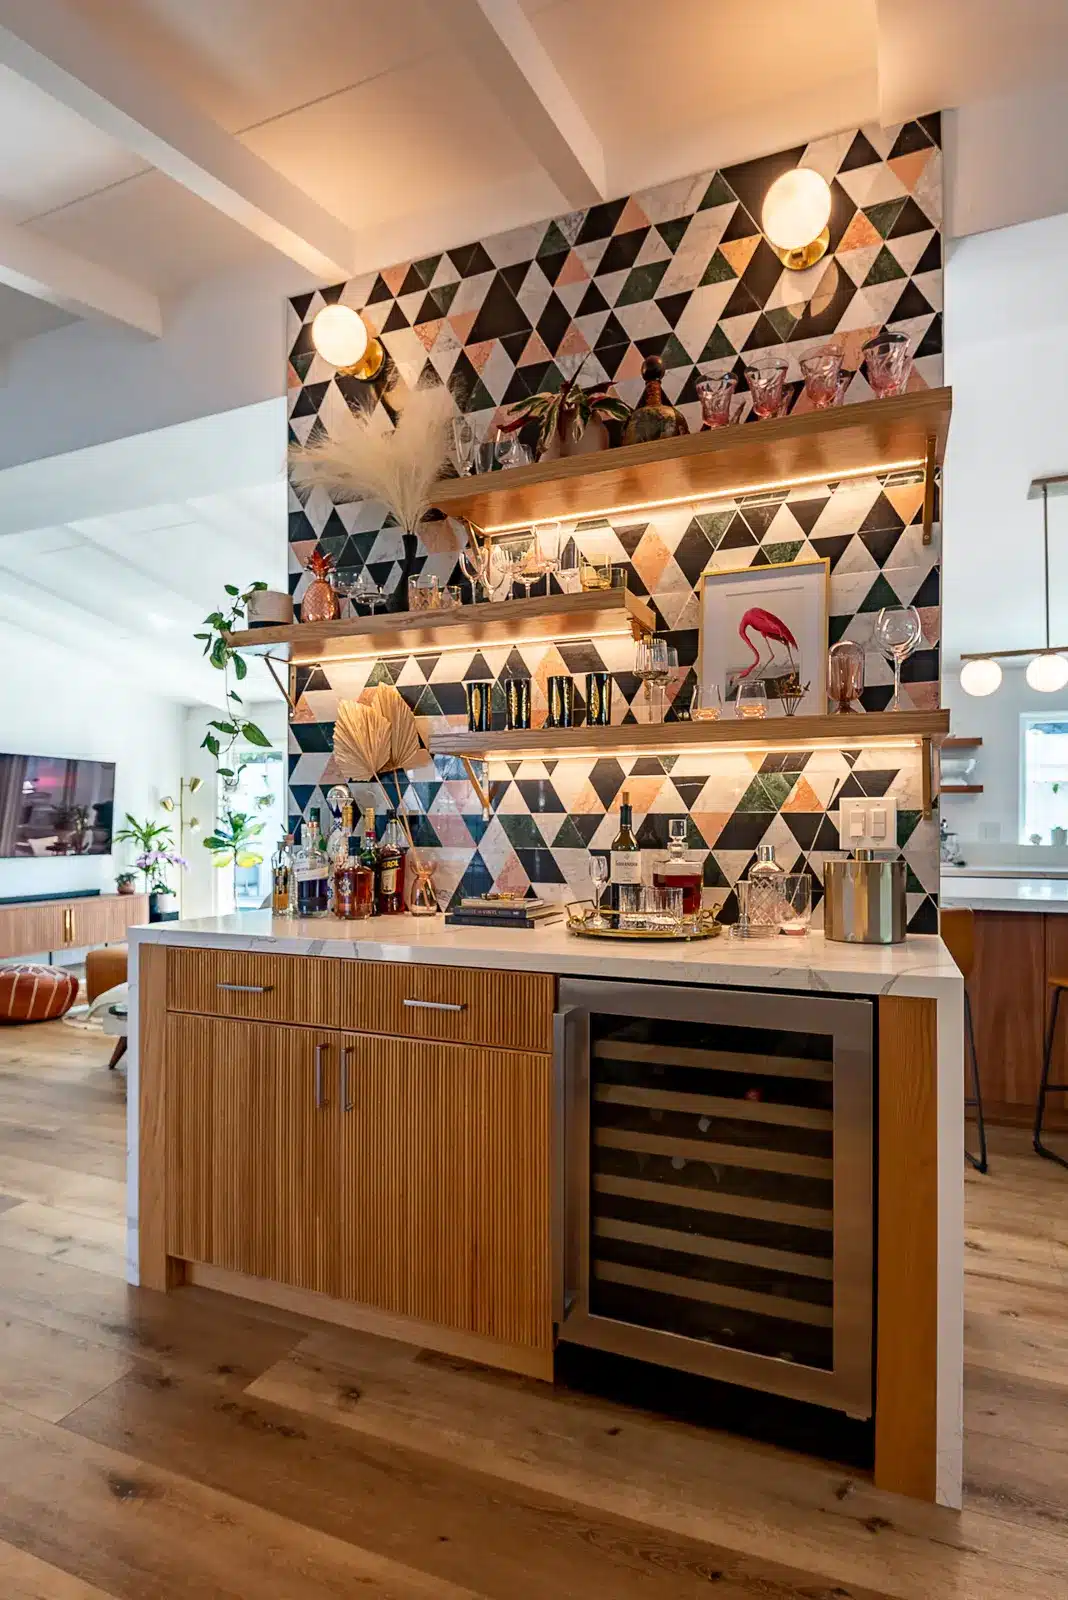 A kitchen bar with graphic backsplash and undercounter wine fridge